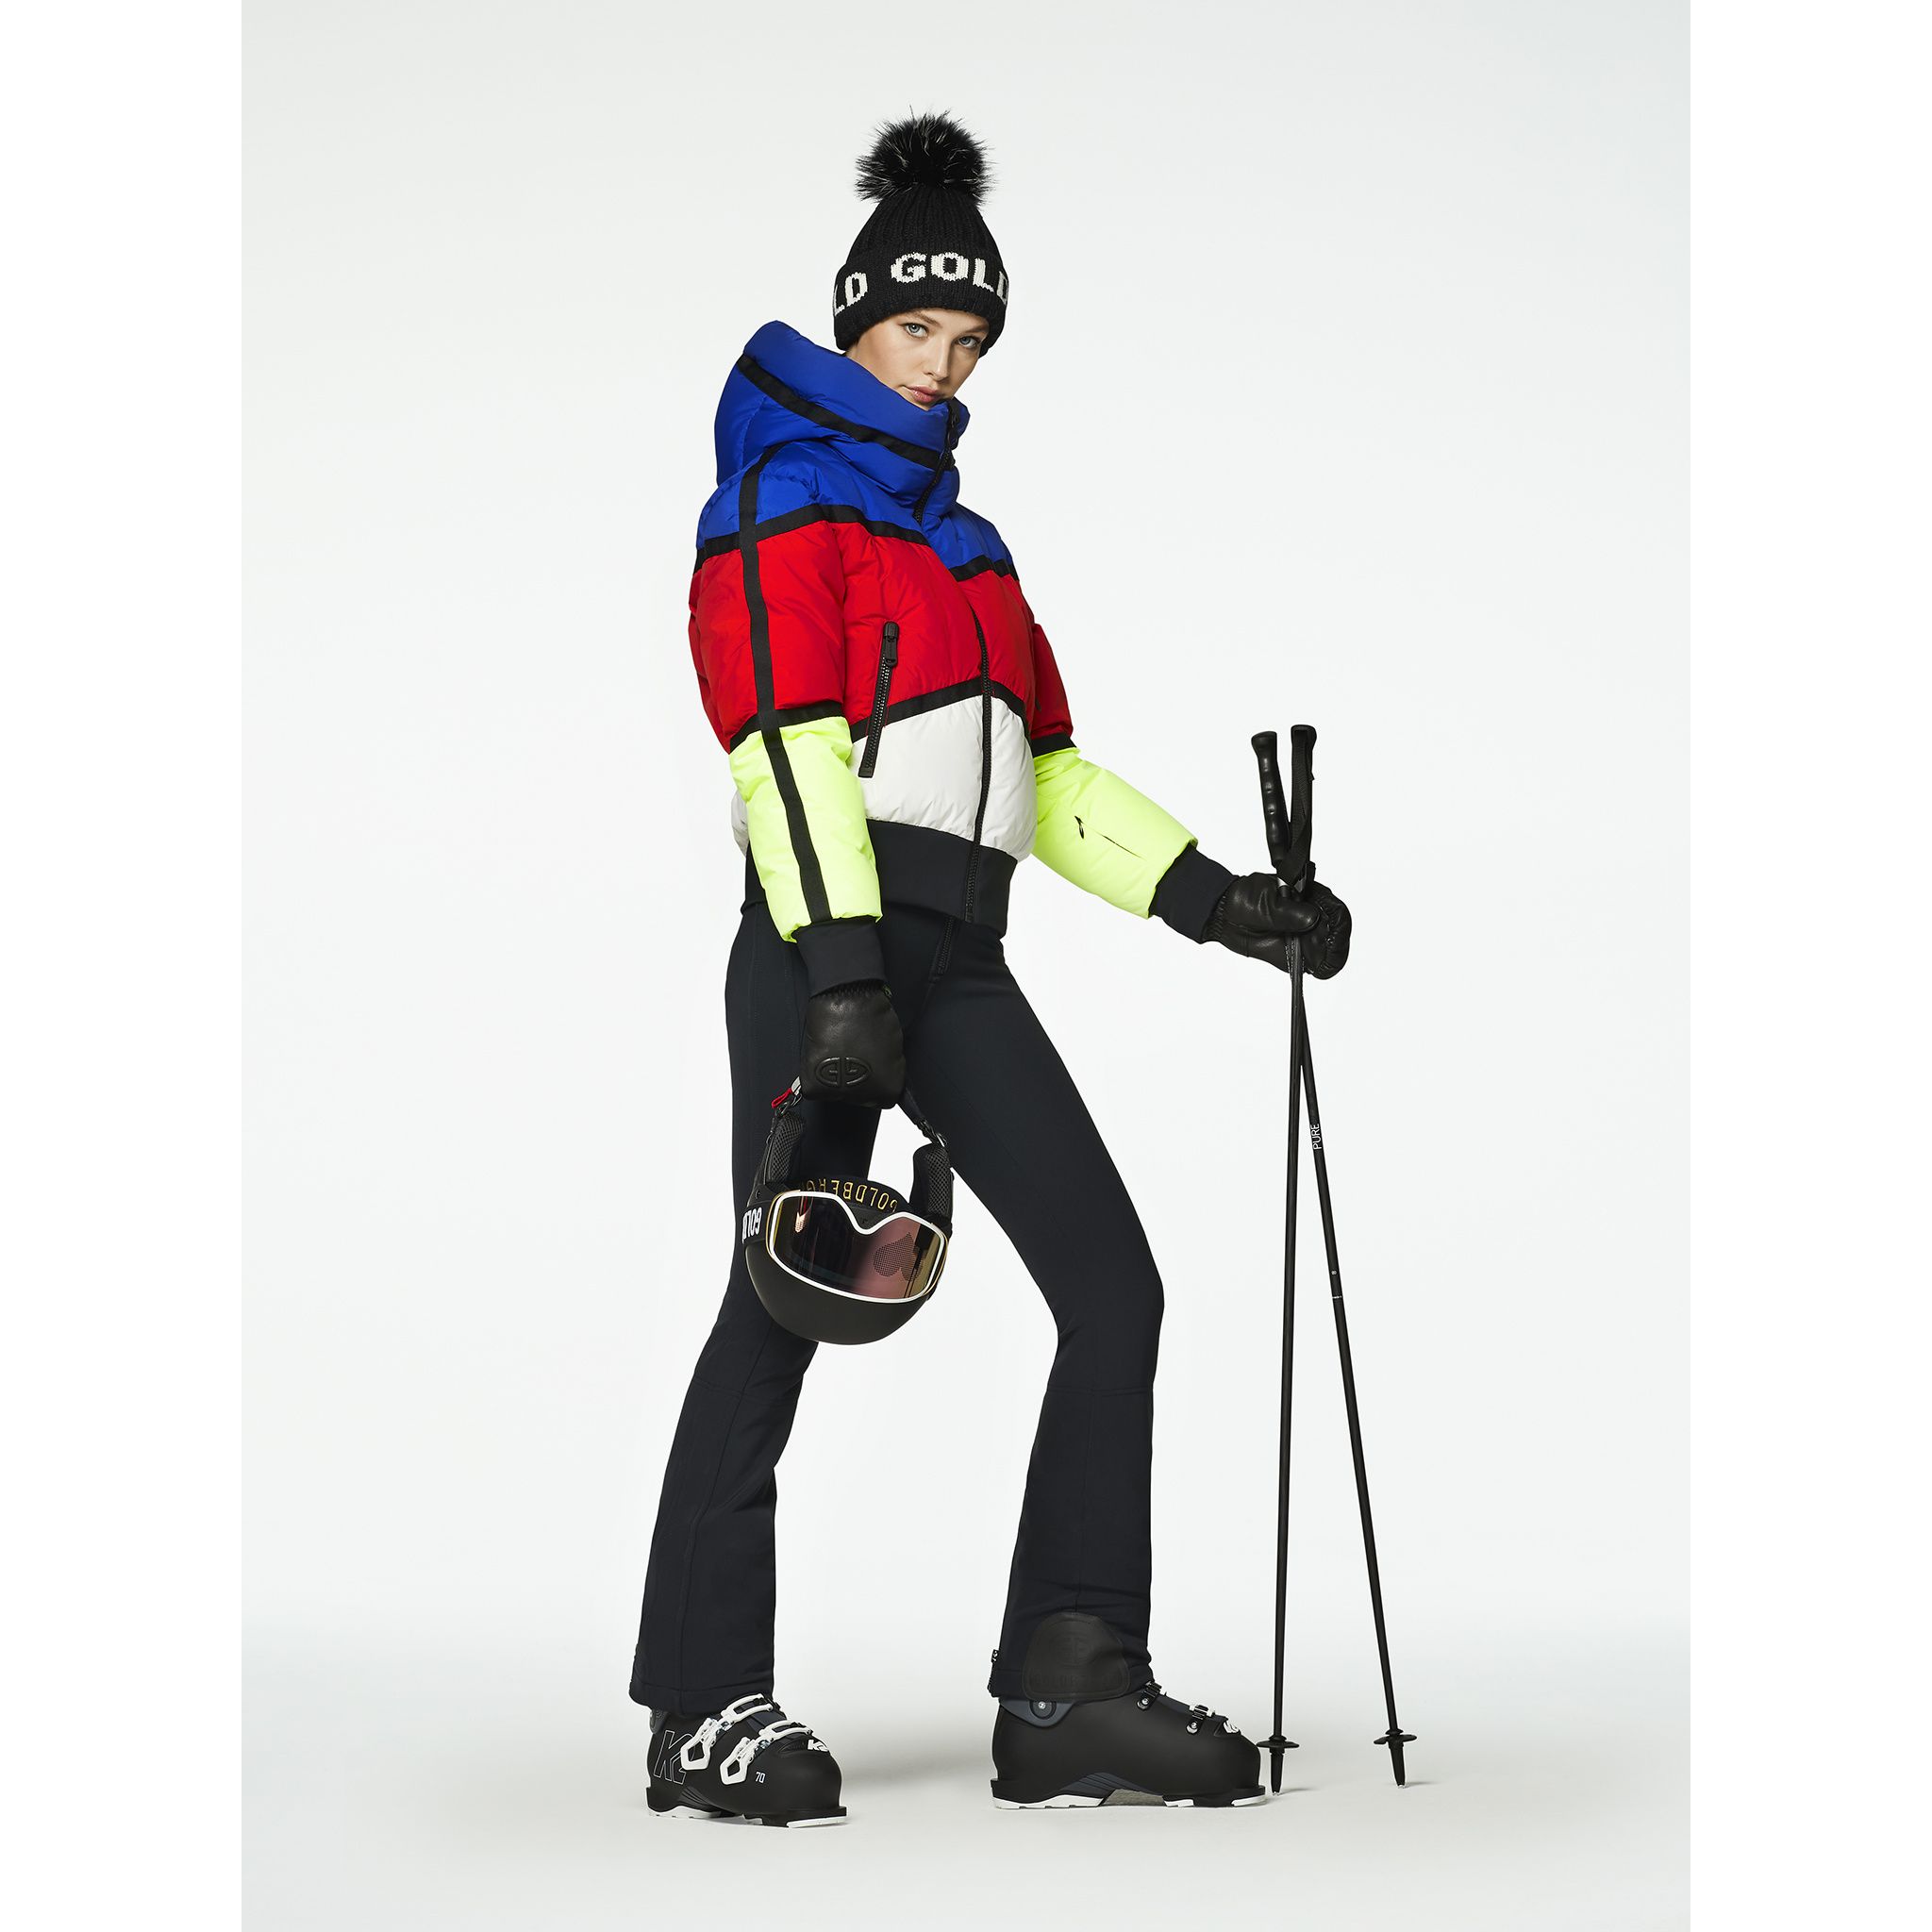 Geci Ski & Snow -  goldbergh MONDRIAAN Jacket Rainbow